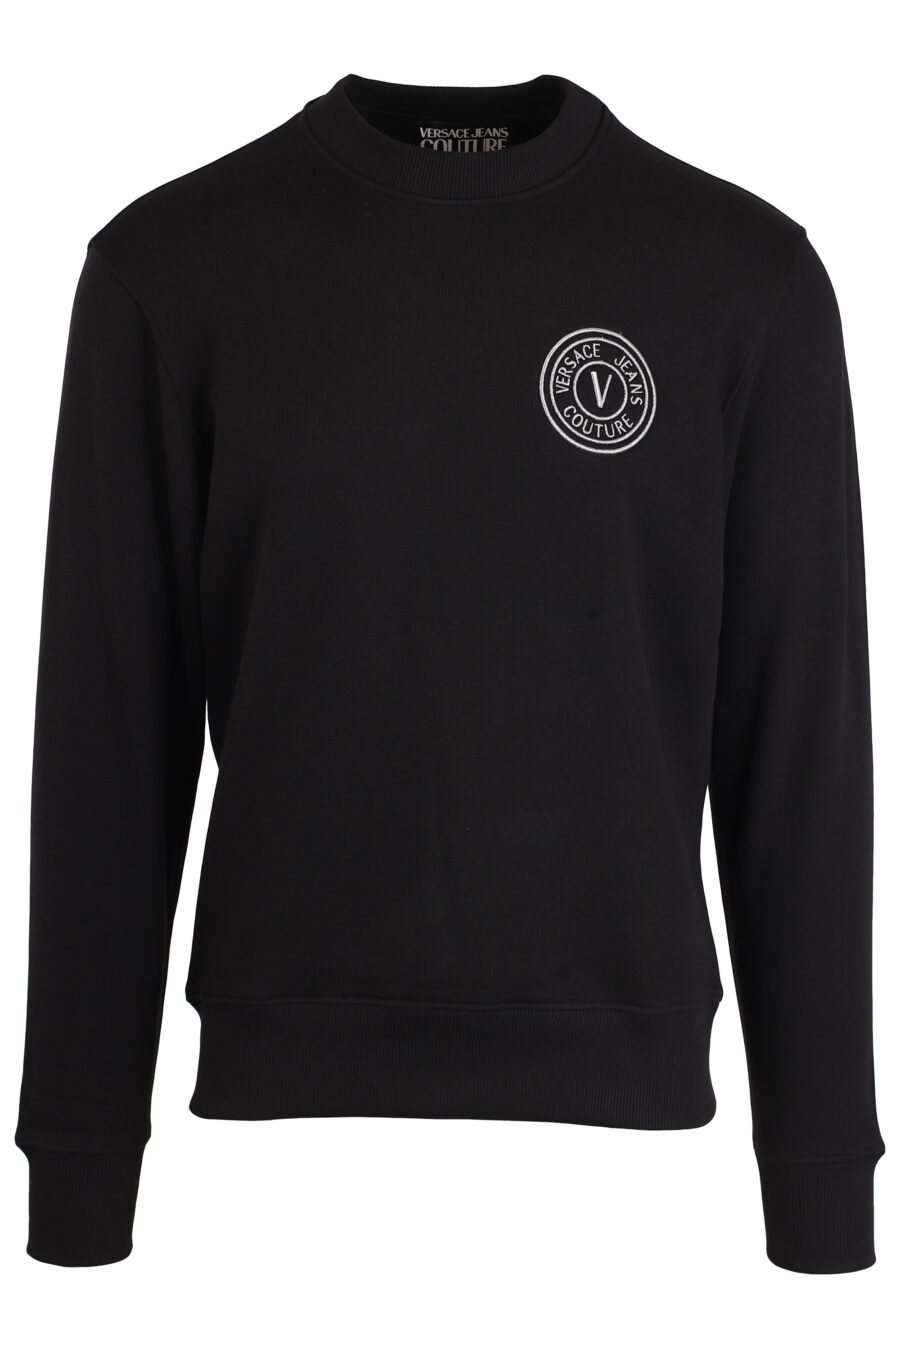 Black sweatshirt with small round silver logo - IMG 3982